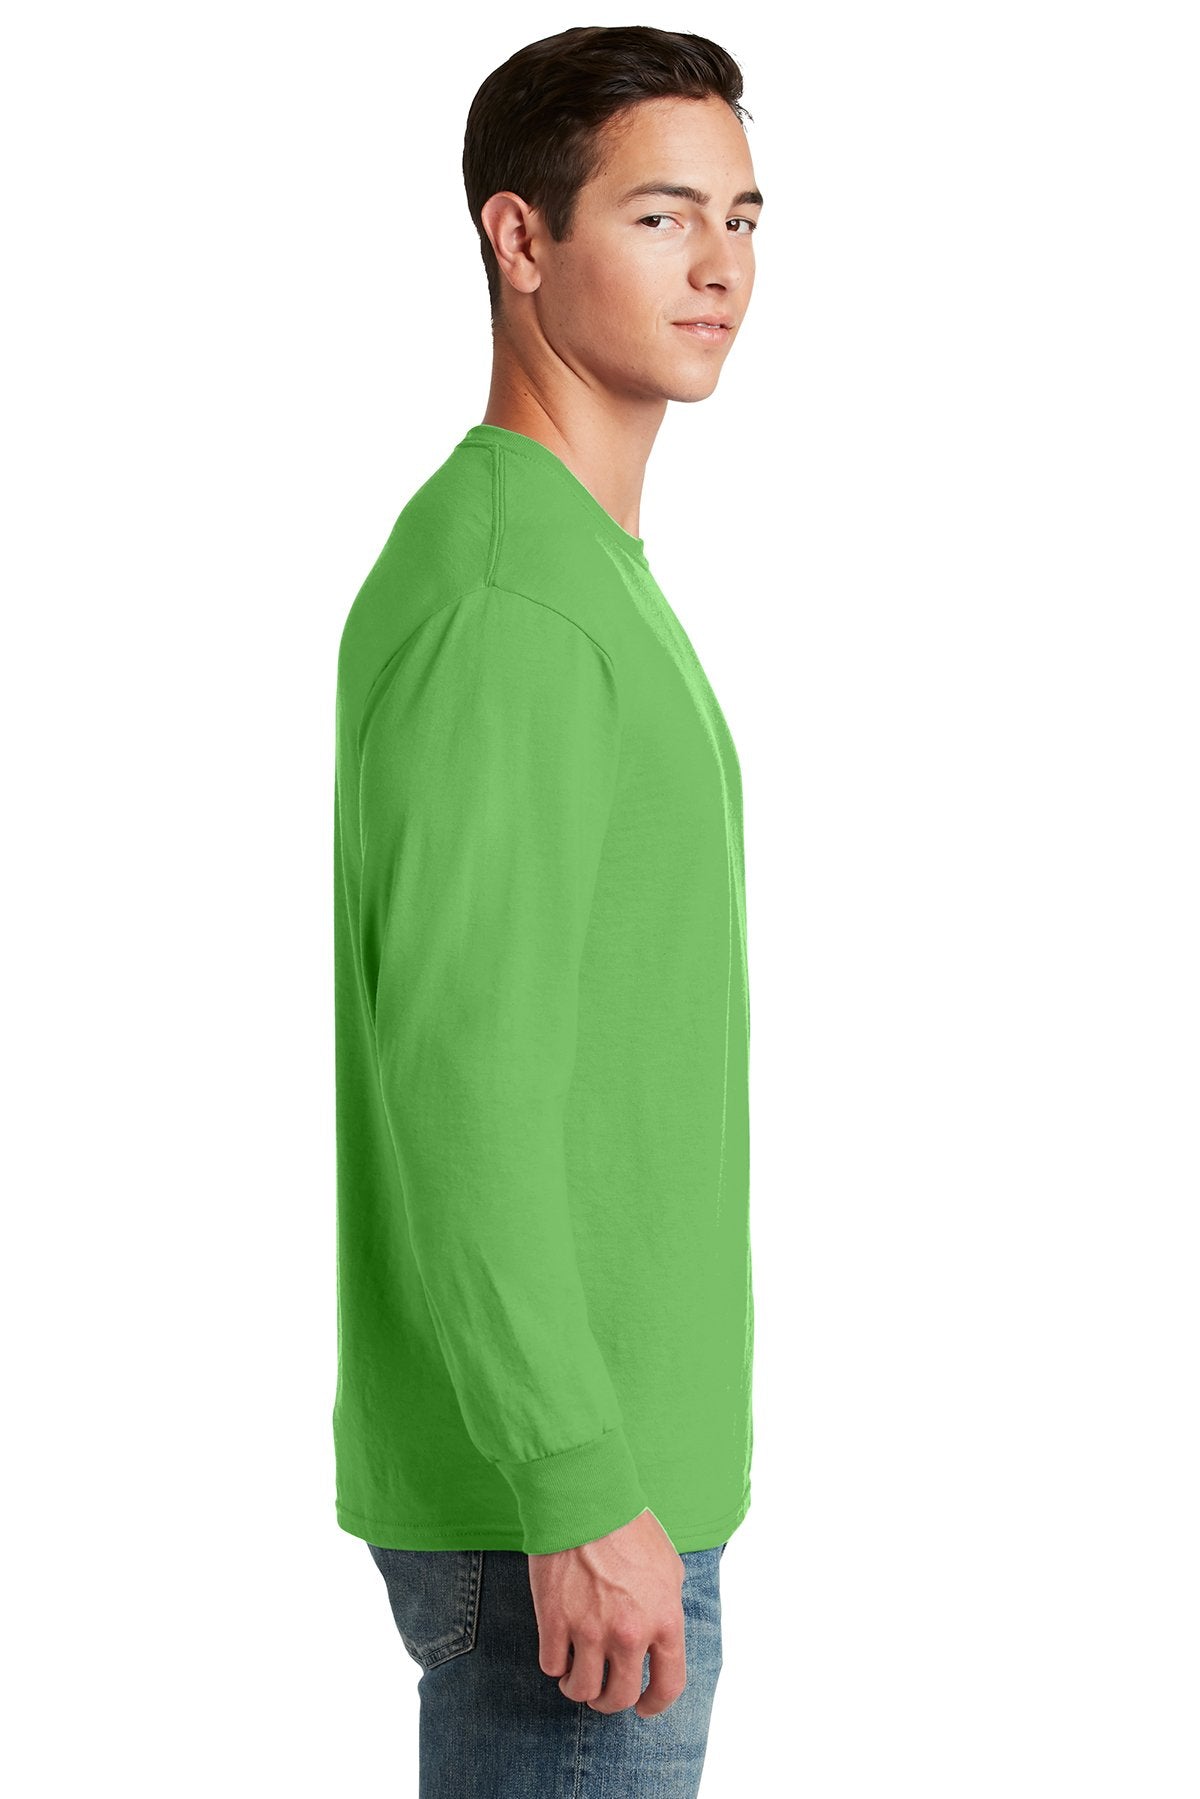 Jerzees Dri-Power 50/50 Cotton/Poly Long Sleeve T-Shirt 29LS Kiwi